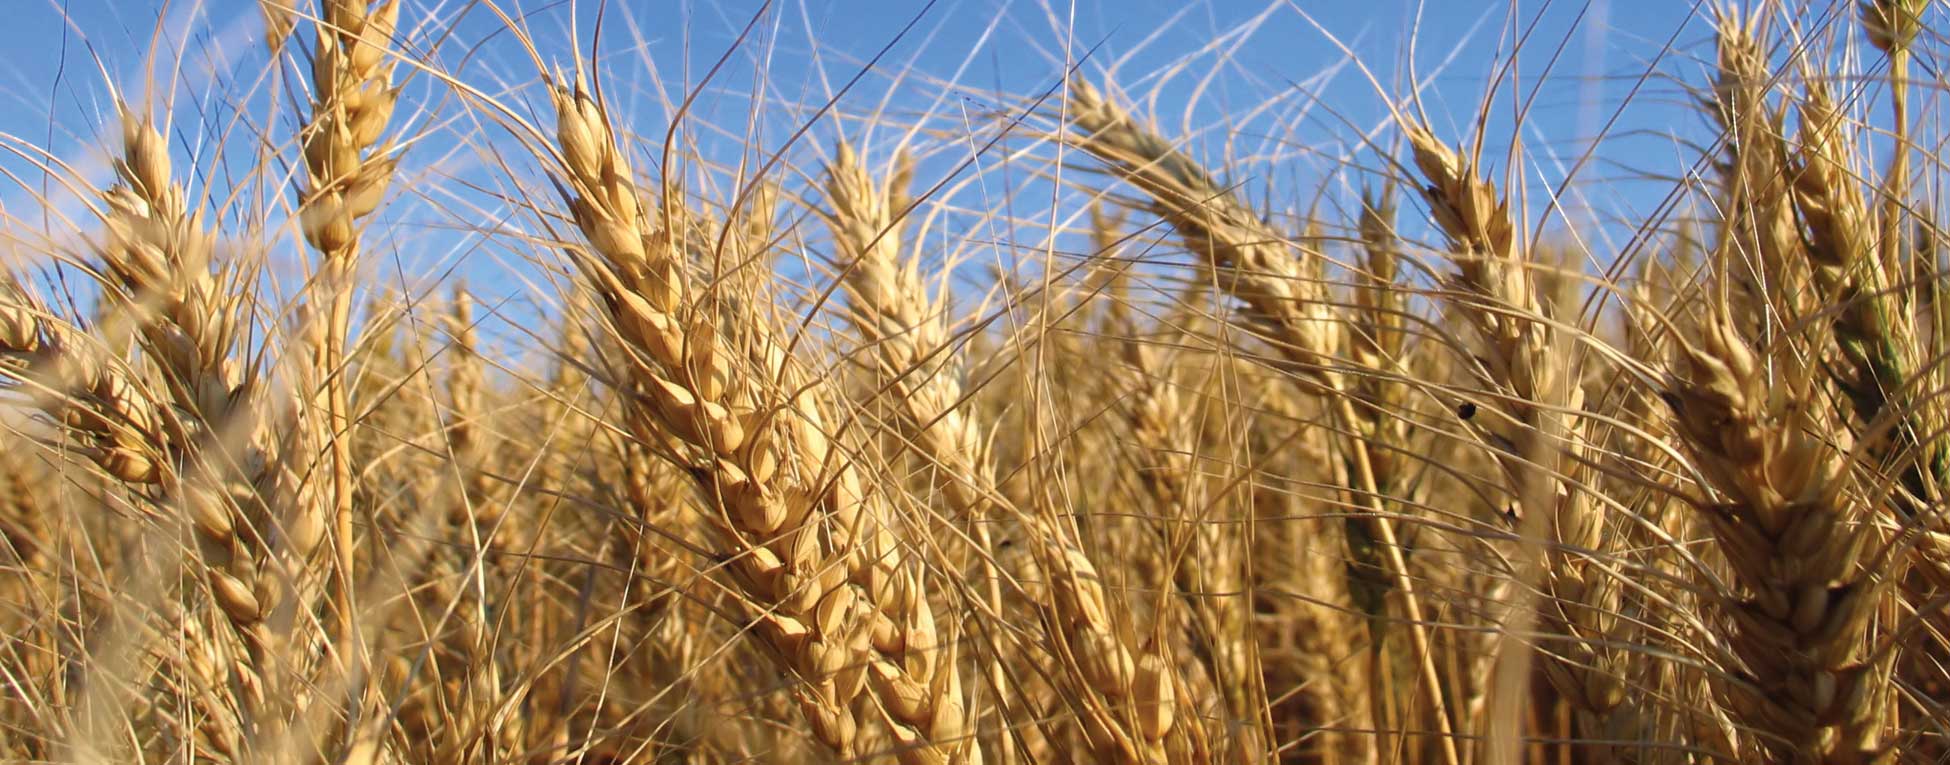 Figure 41. Wheat